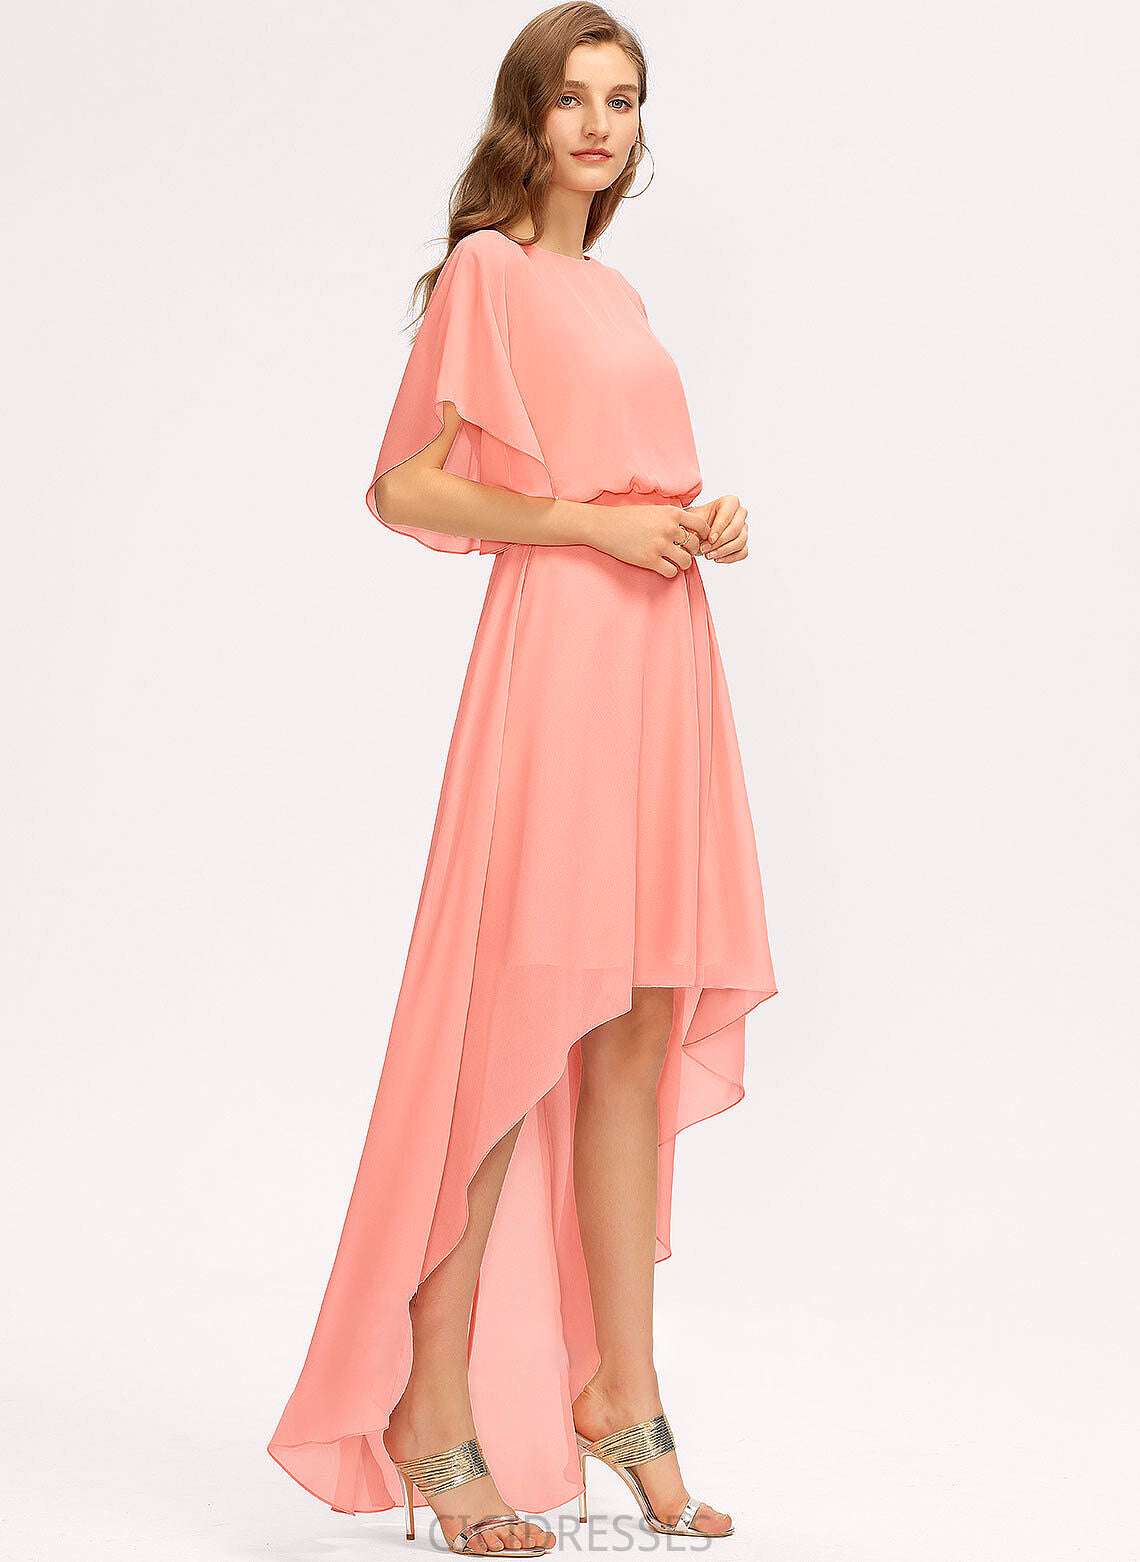 ScoopNeck Fabric Asymmetrical Neckline A-Line Silhouette Length Straps Aiyana Sleeveless Natural Waist Spaghetti Staps Bridesmaid Dresses